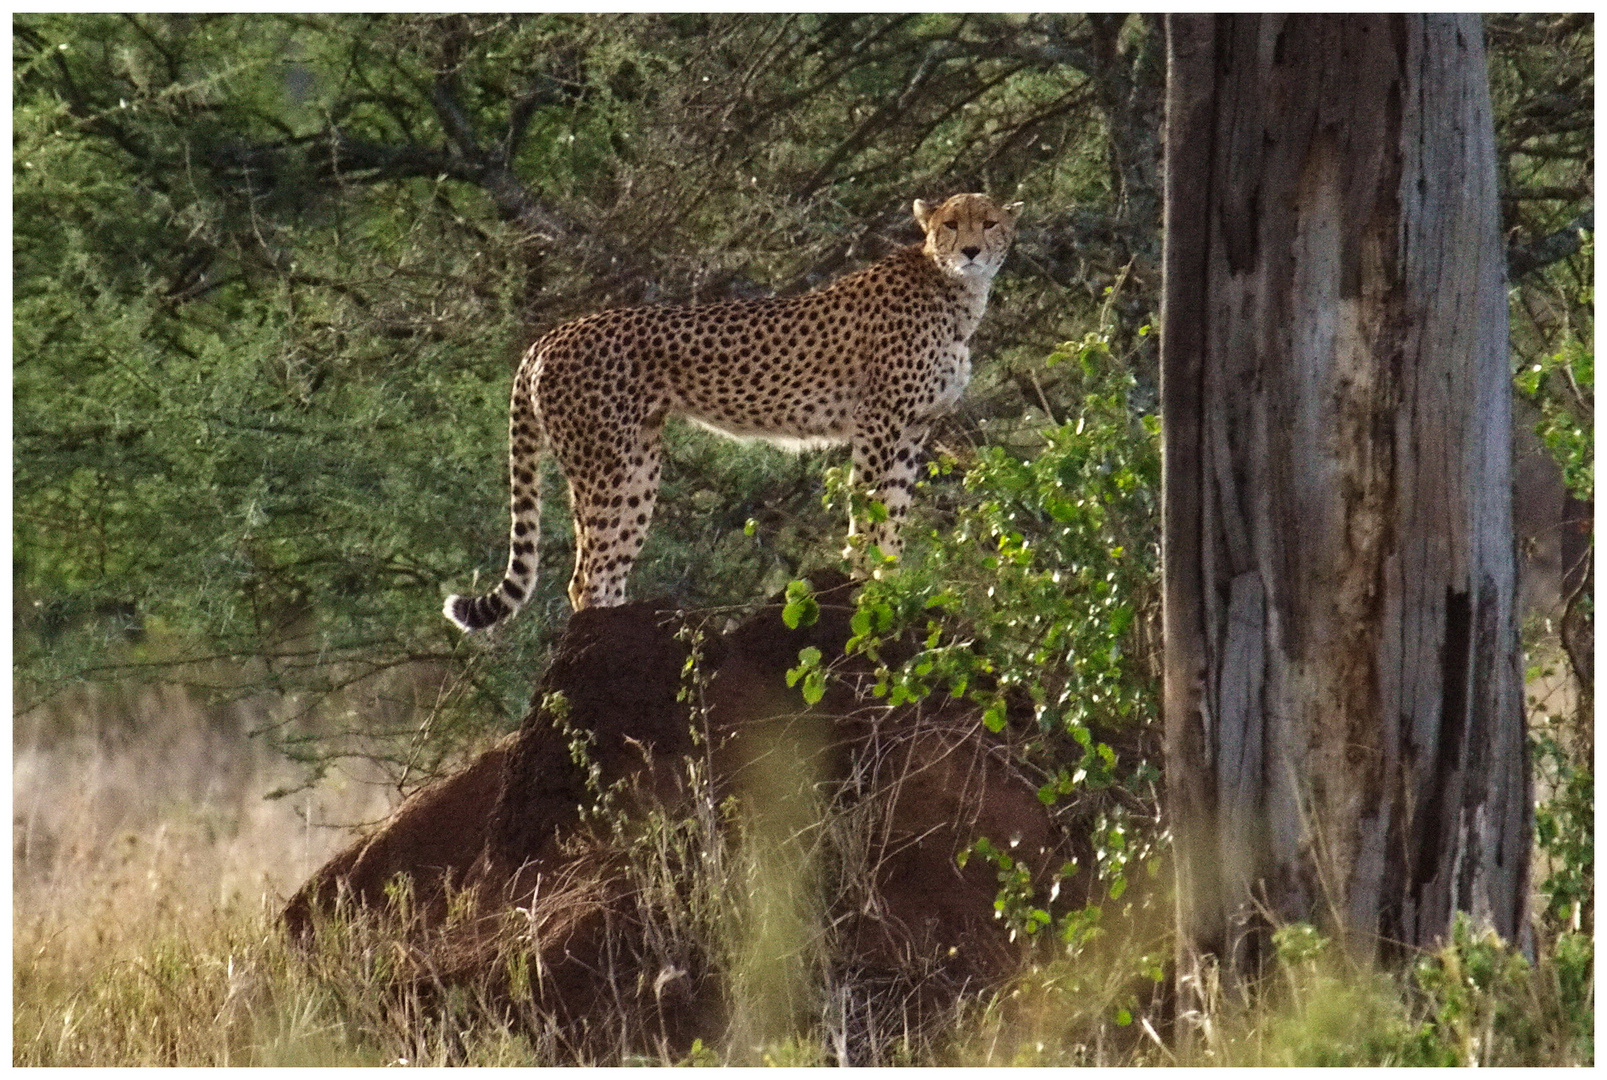 "Cheetah" prüft ihre Umgebung